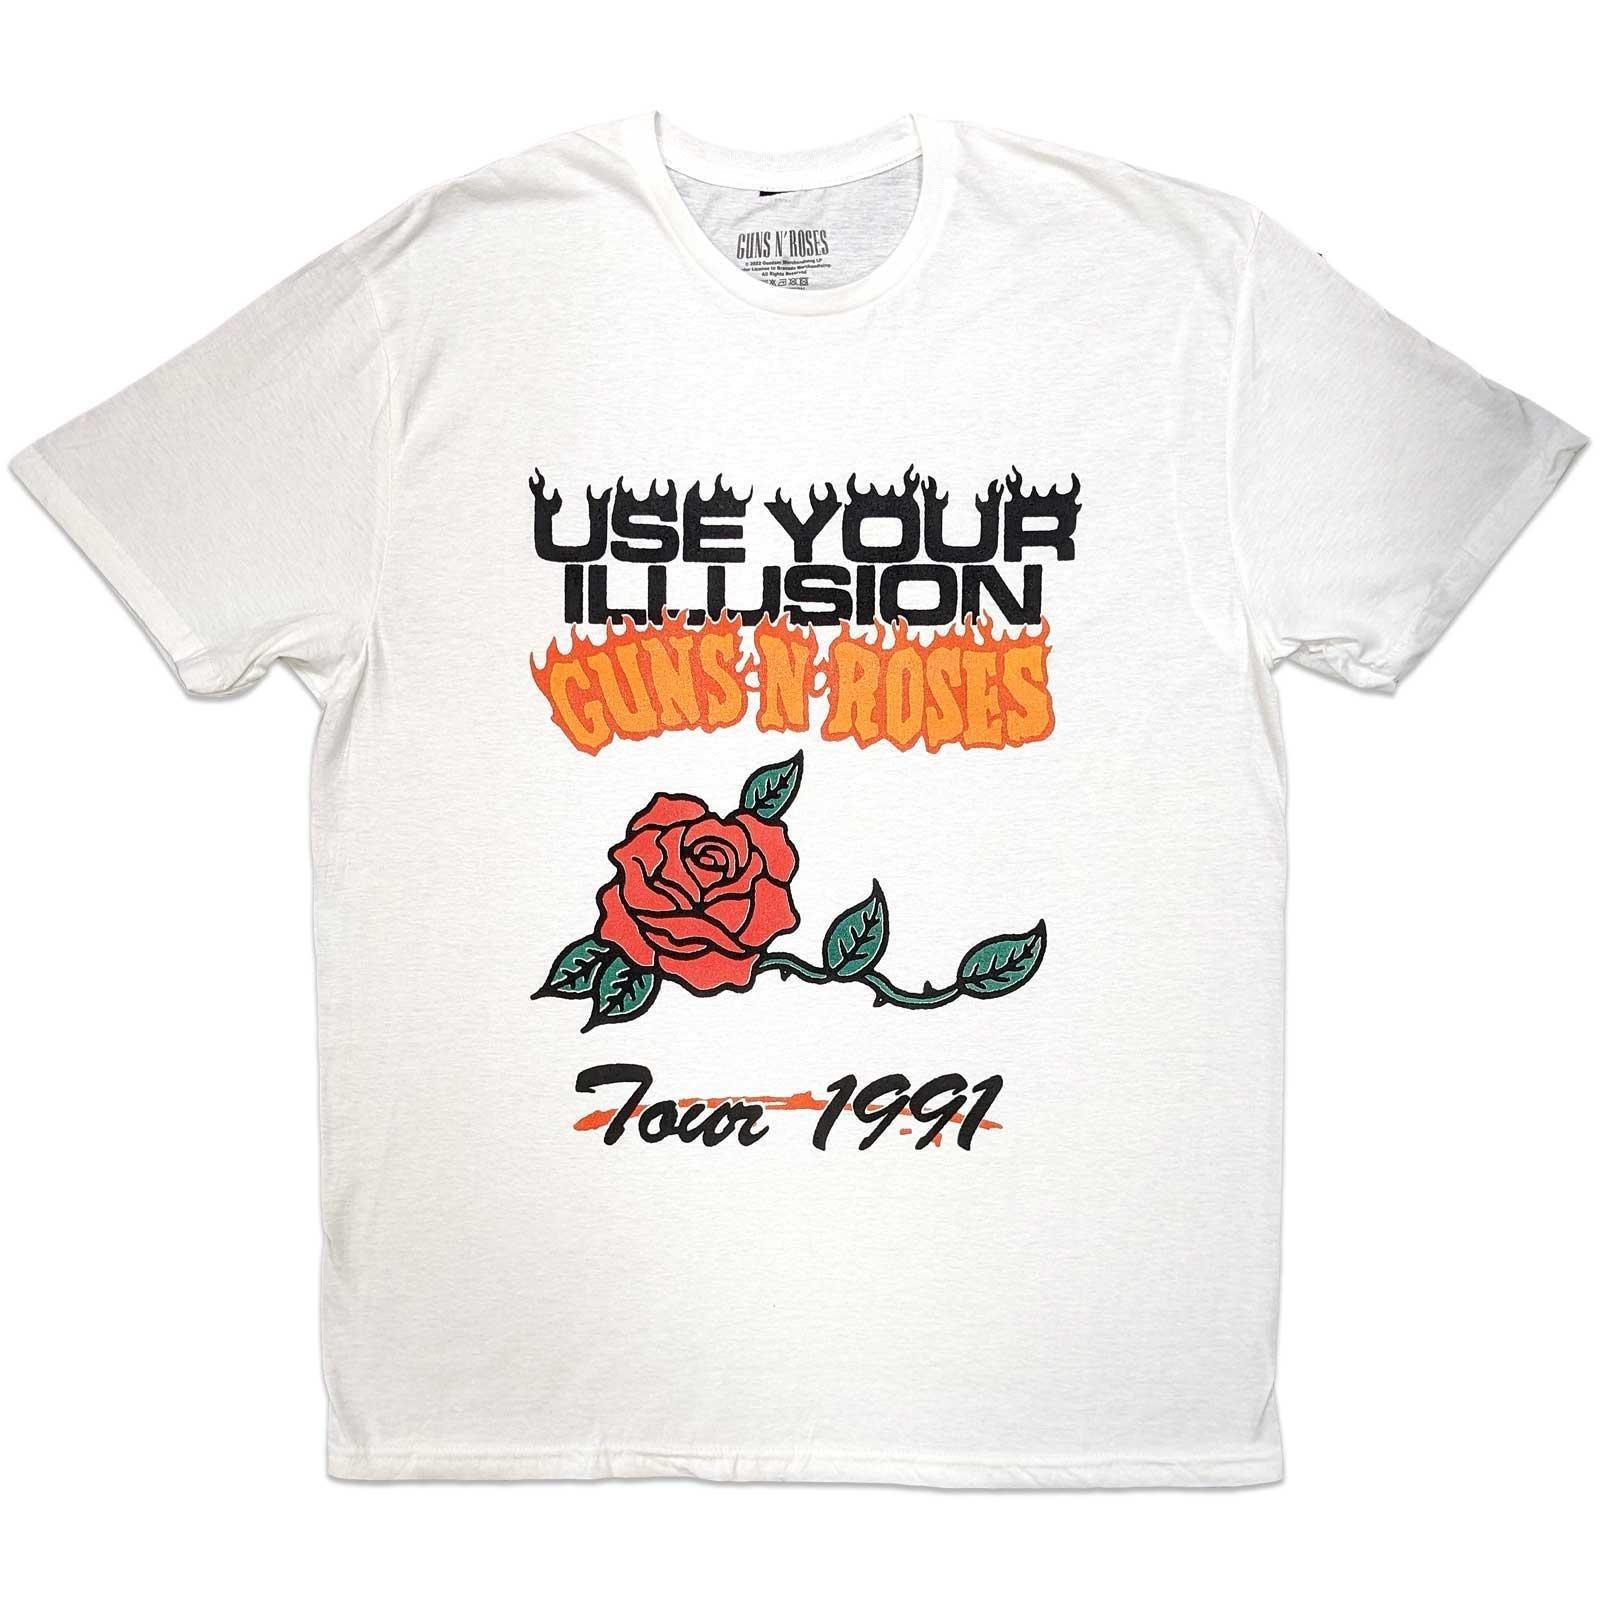 Use Your Illusion Tour 1991 Tshirt Damen Weiss L von Guns N Roses